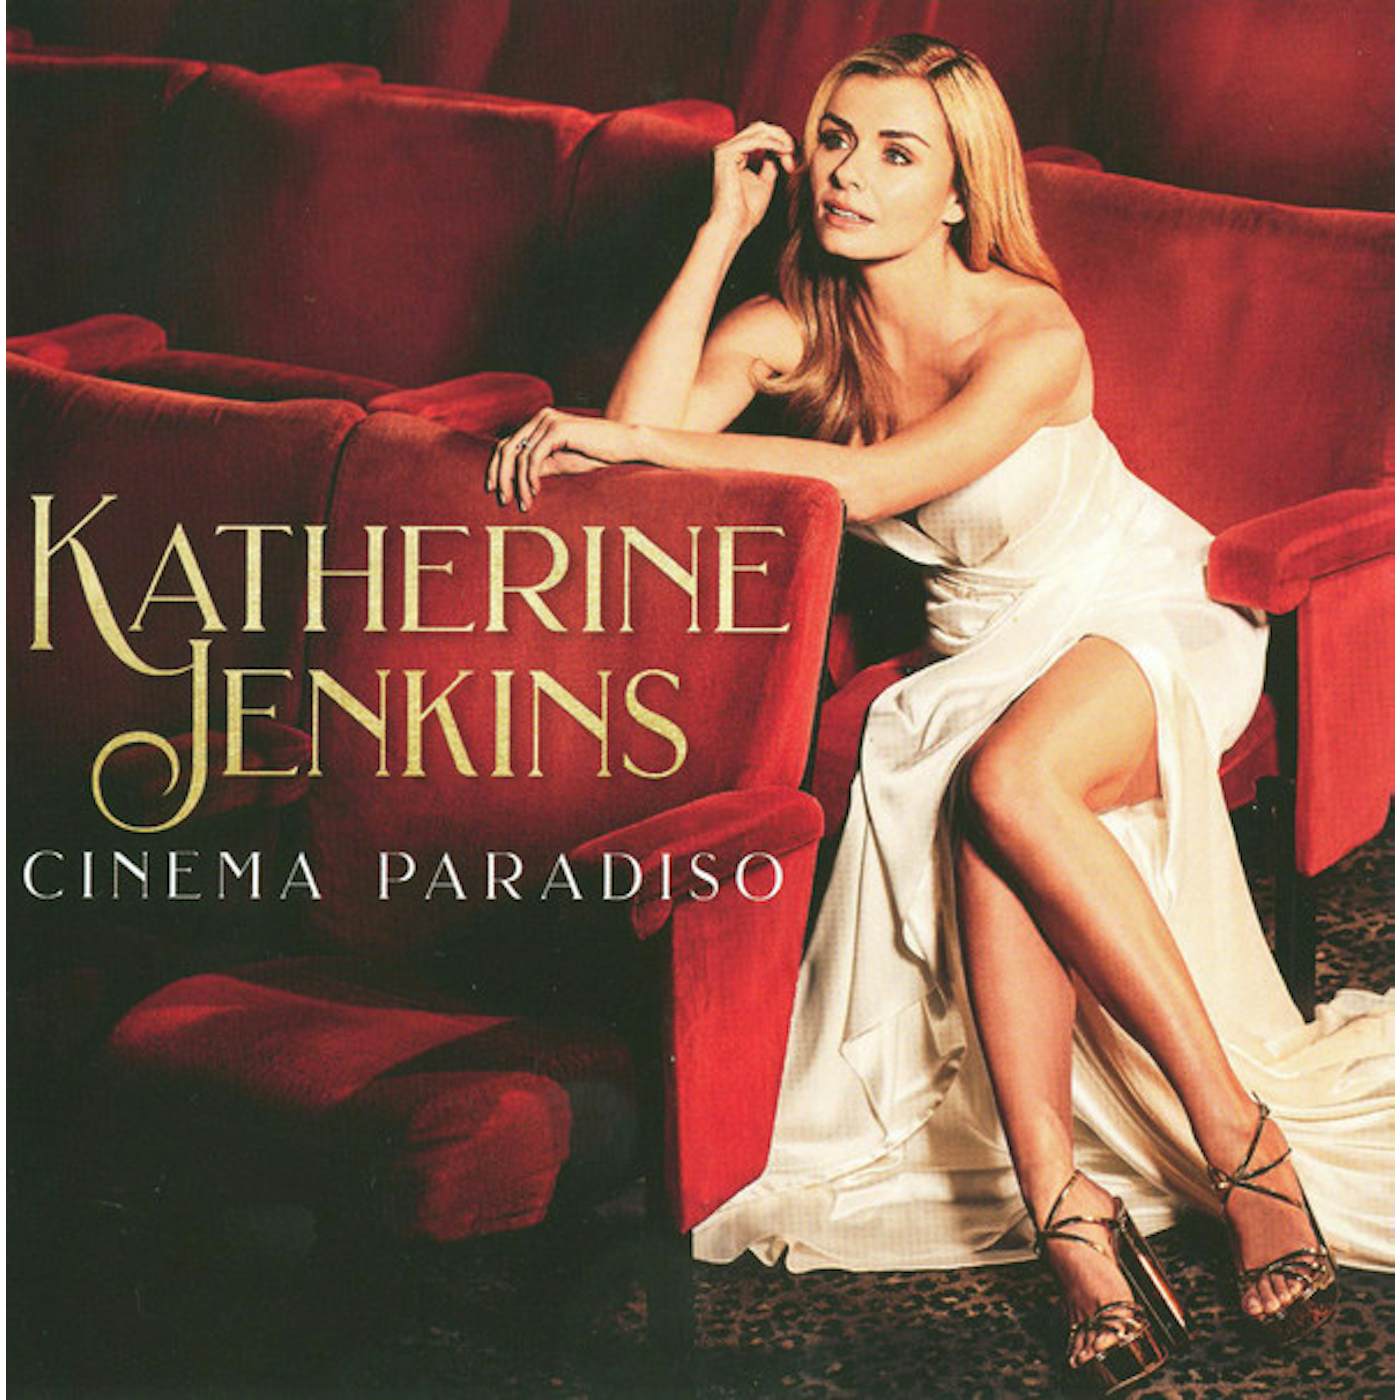 Katherine Jenkins CINEMA PARADISO CD